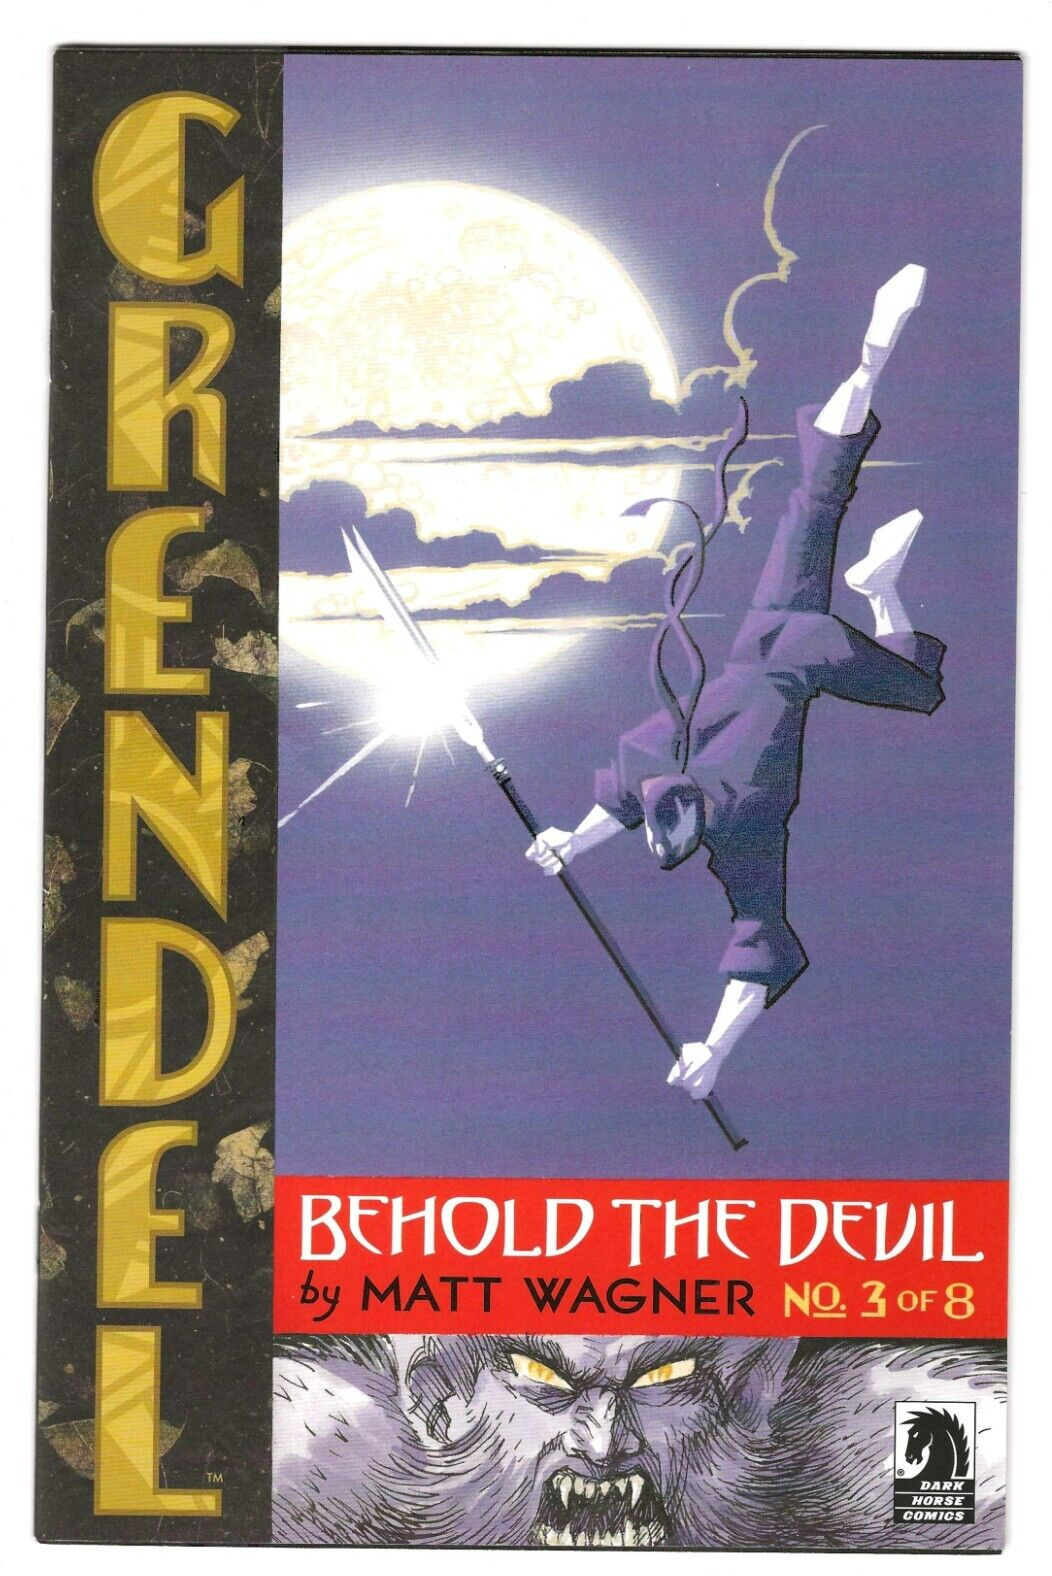 Dark Horse Comics GRENDEL BEHOLD THE DEVIL #3 first printing